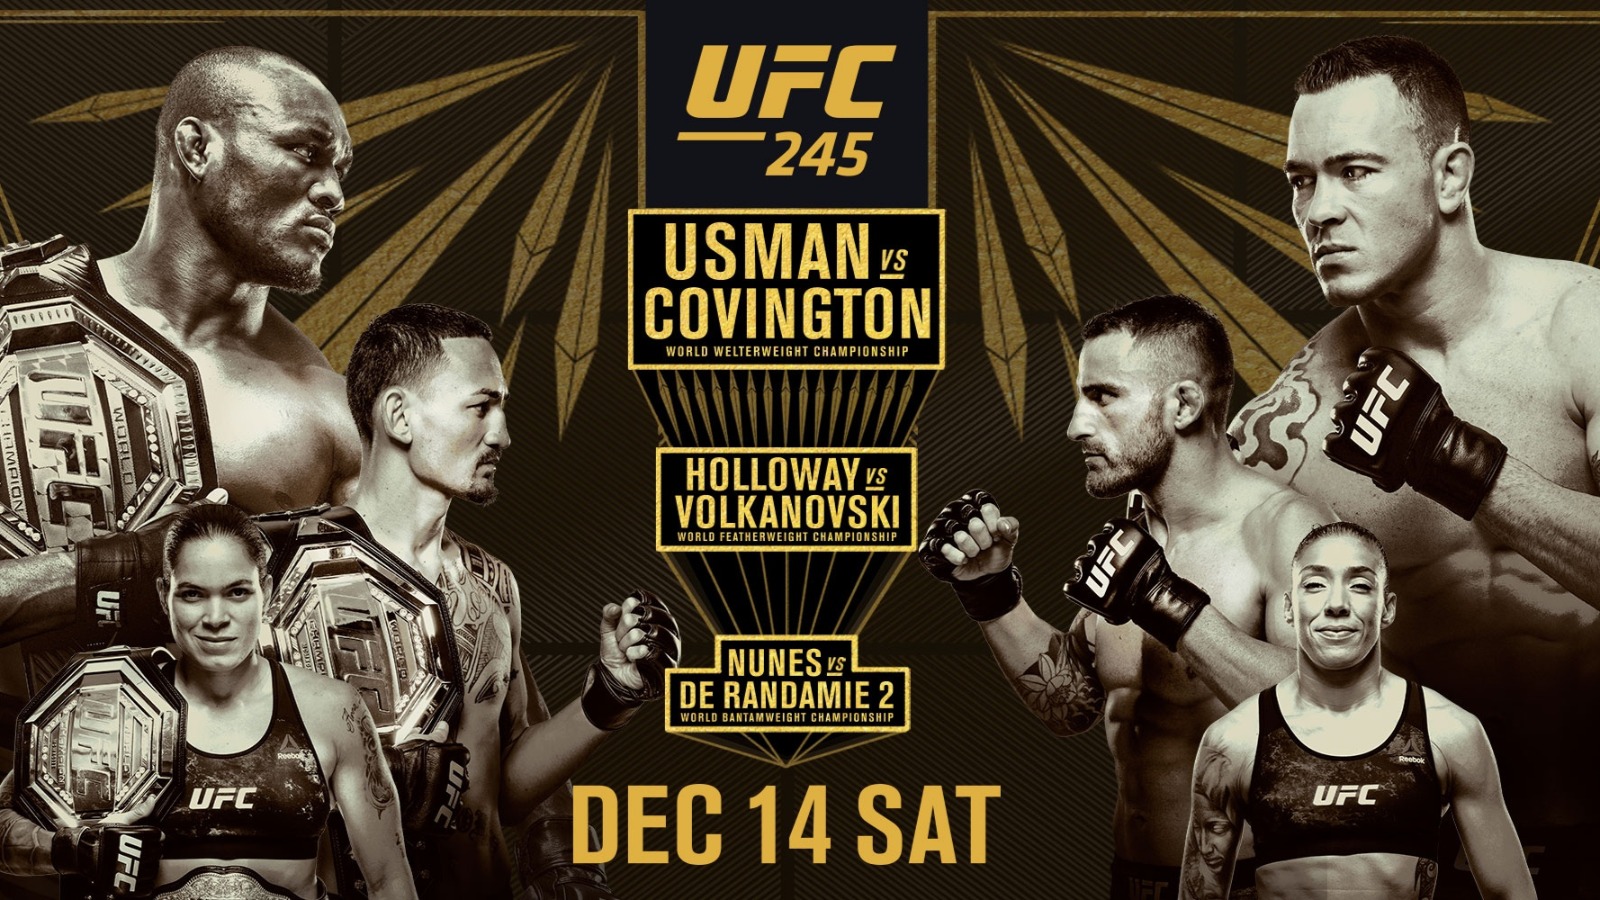 Watch 'UFC 245' Online Live Stream Usman vs. Covington Anywhere